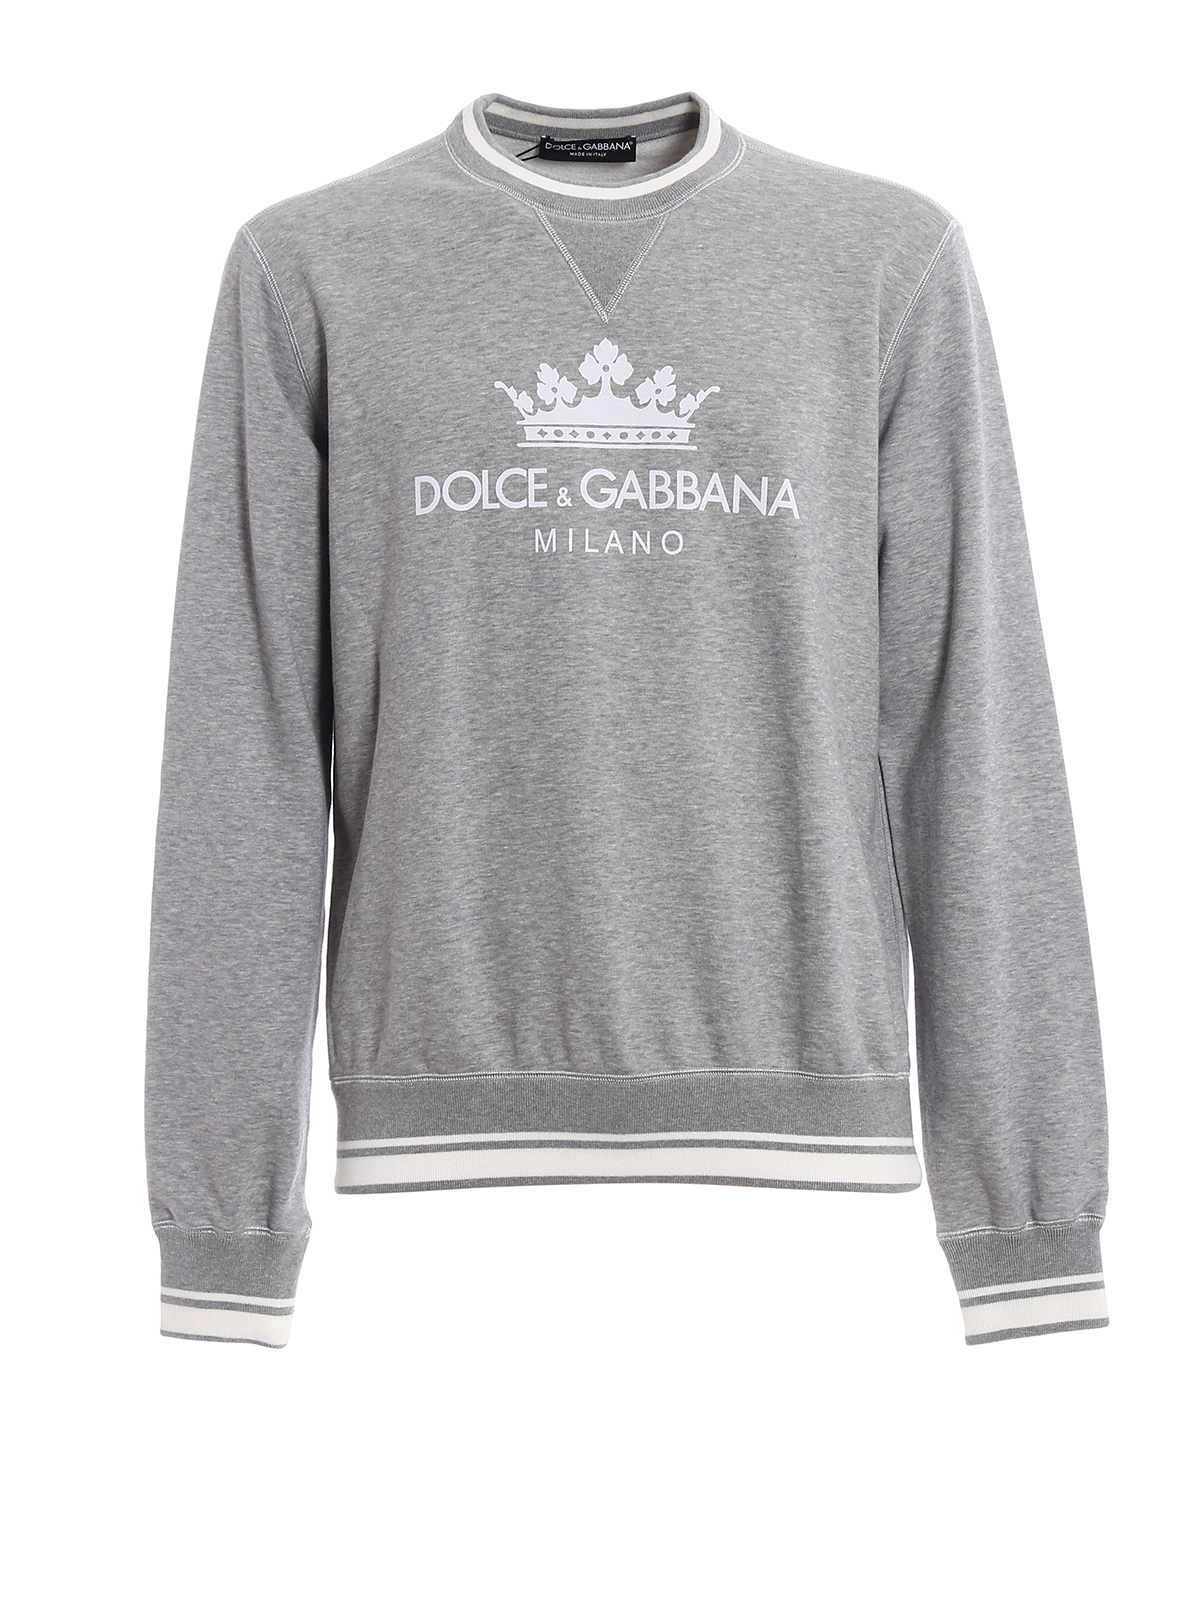 dolce and gabbana grey hoodie